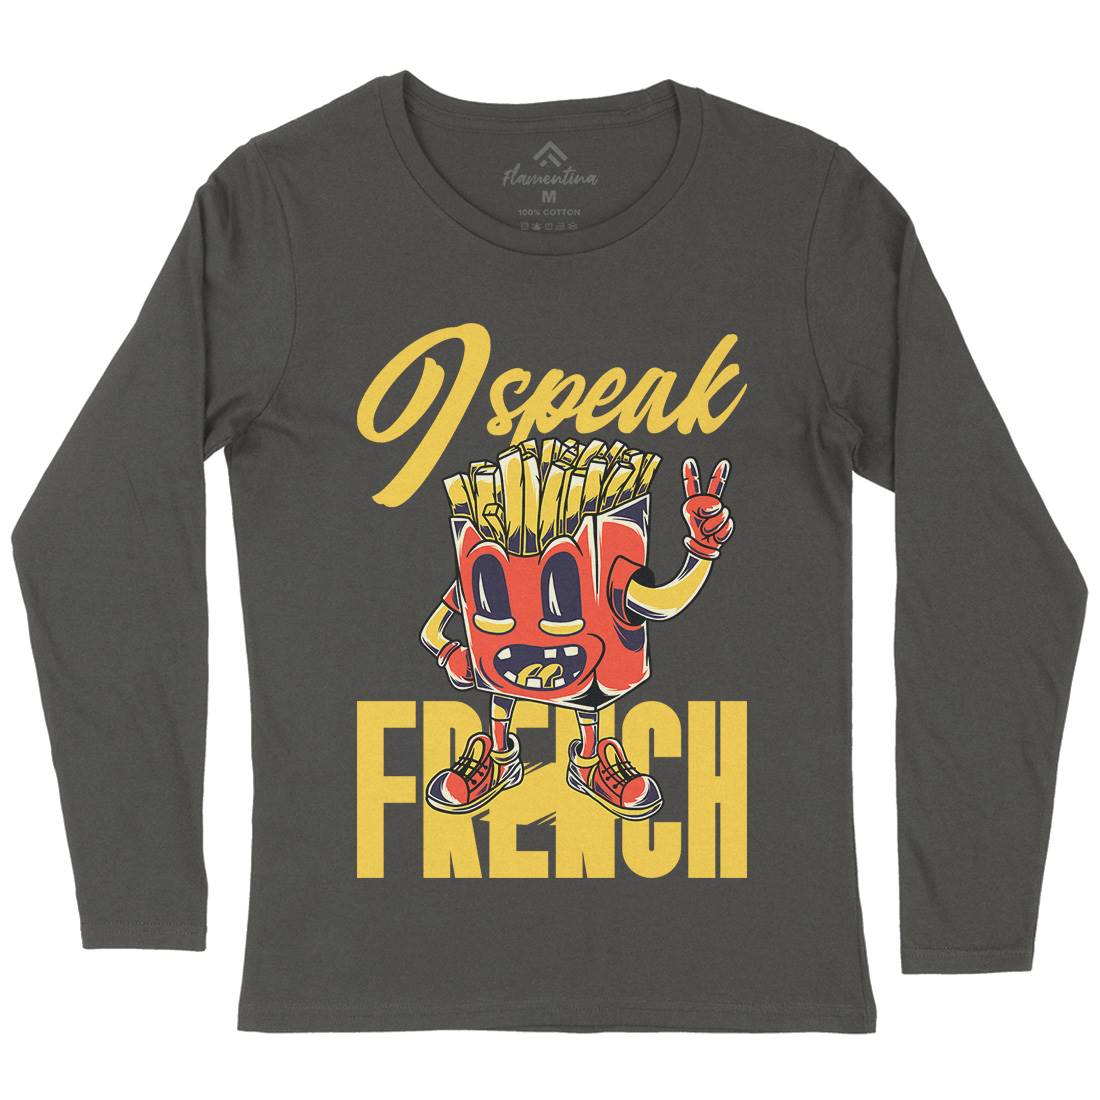 I Speak French Womens Long Sleeve T-Shirt Food C817